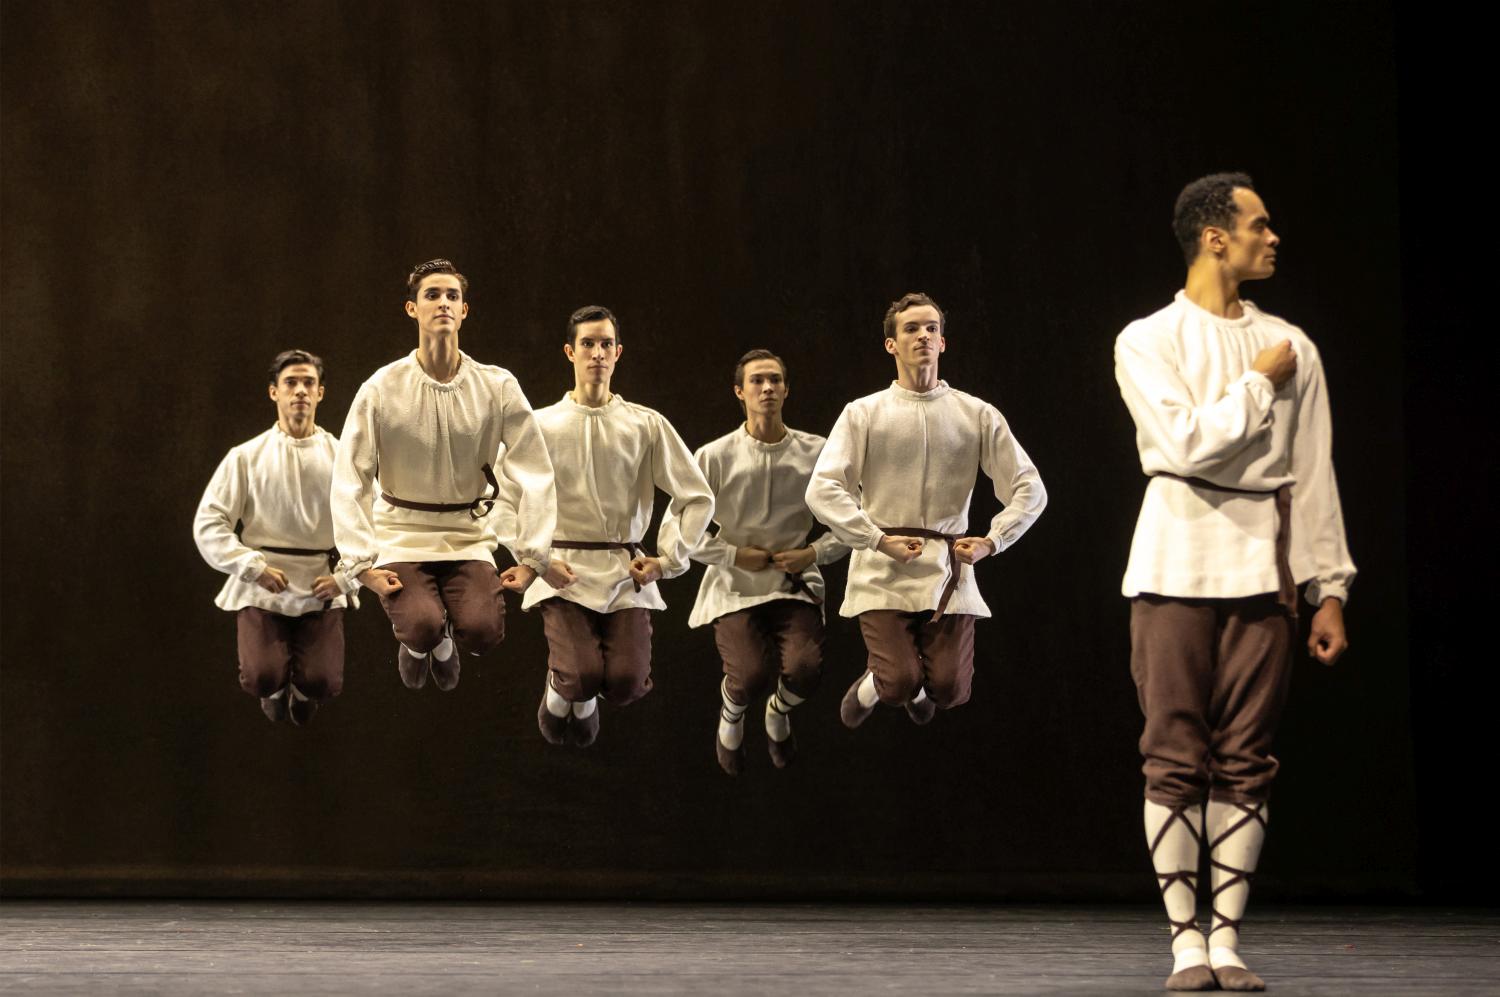 14. P.Octávio, M.Gutiérrez Rubi, I.Arregui, M.Yerg, K.Smith, and B.Lawrence, “Les Noces” by B.Nijinska, Ballet Zurich 2024 © G.Batardon 